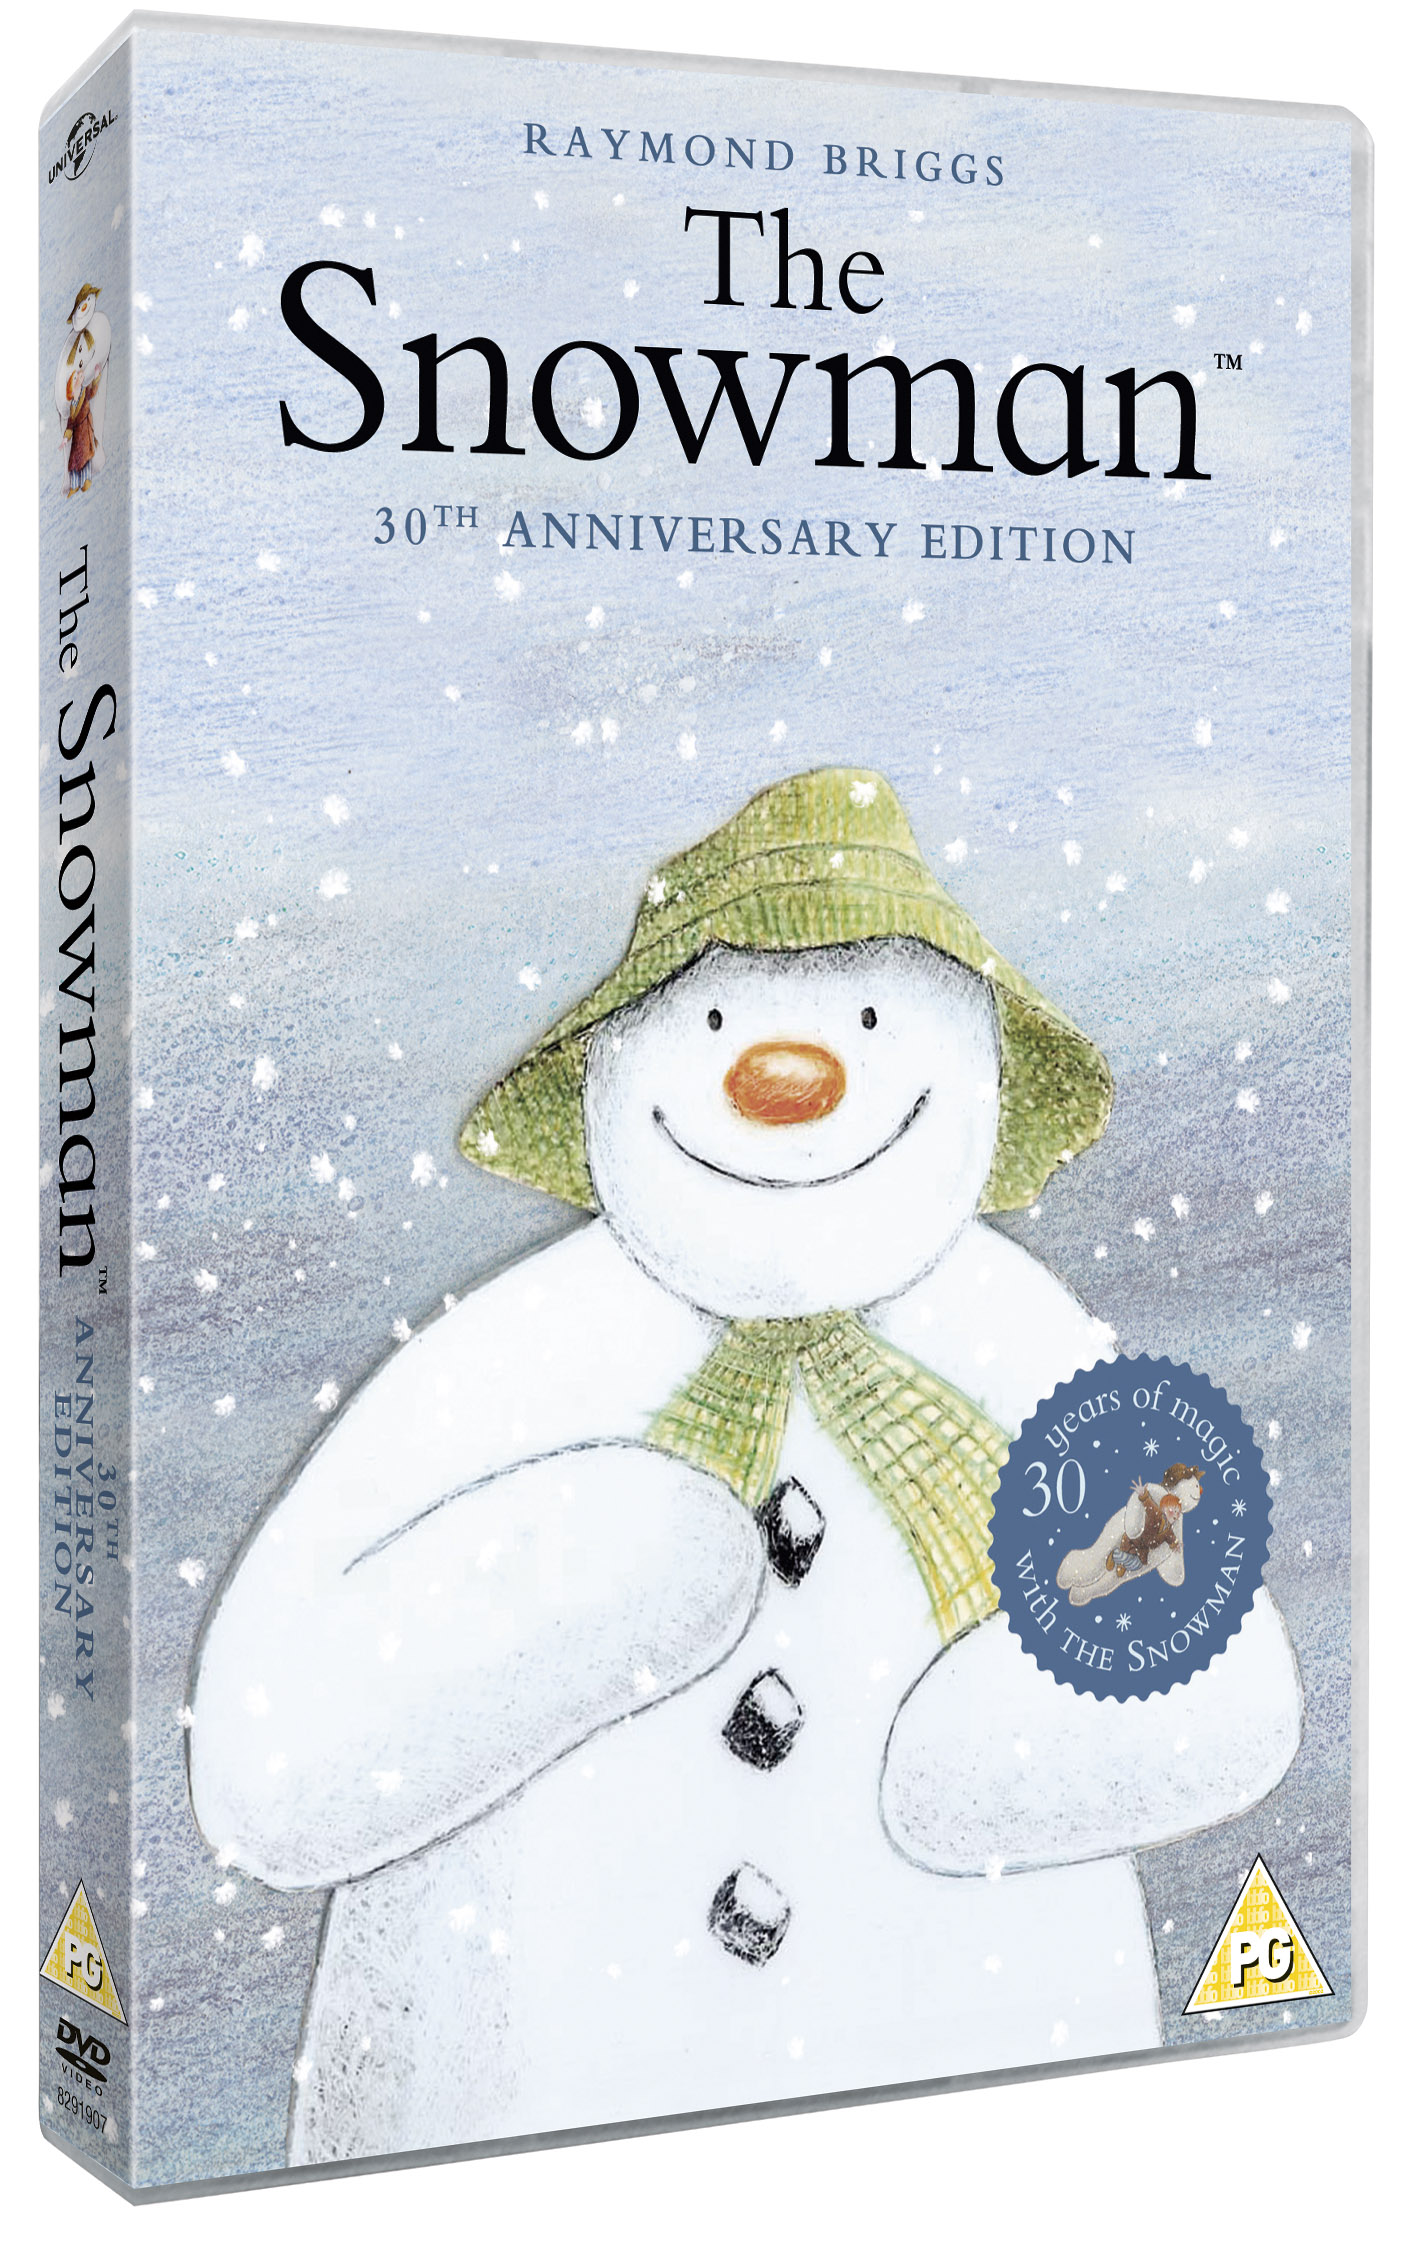 The Snowman 30th Anniversary Edition